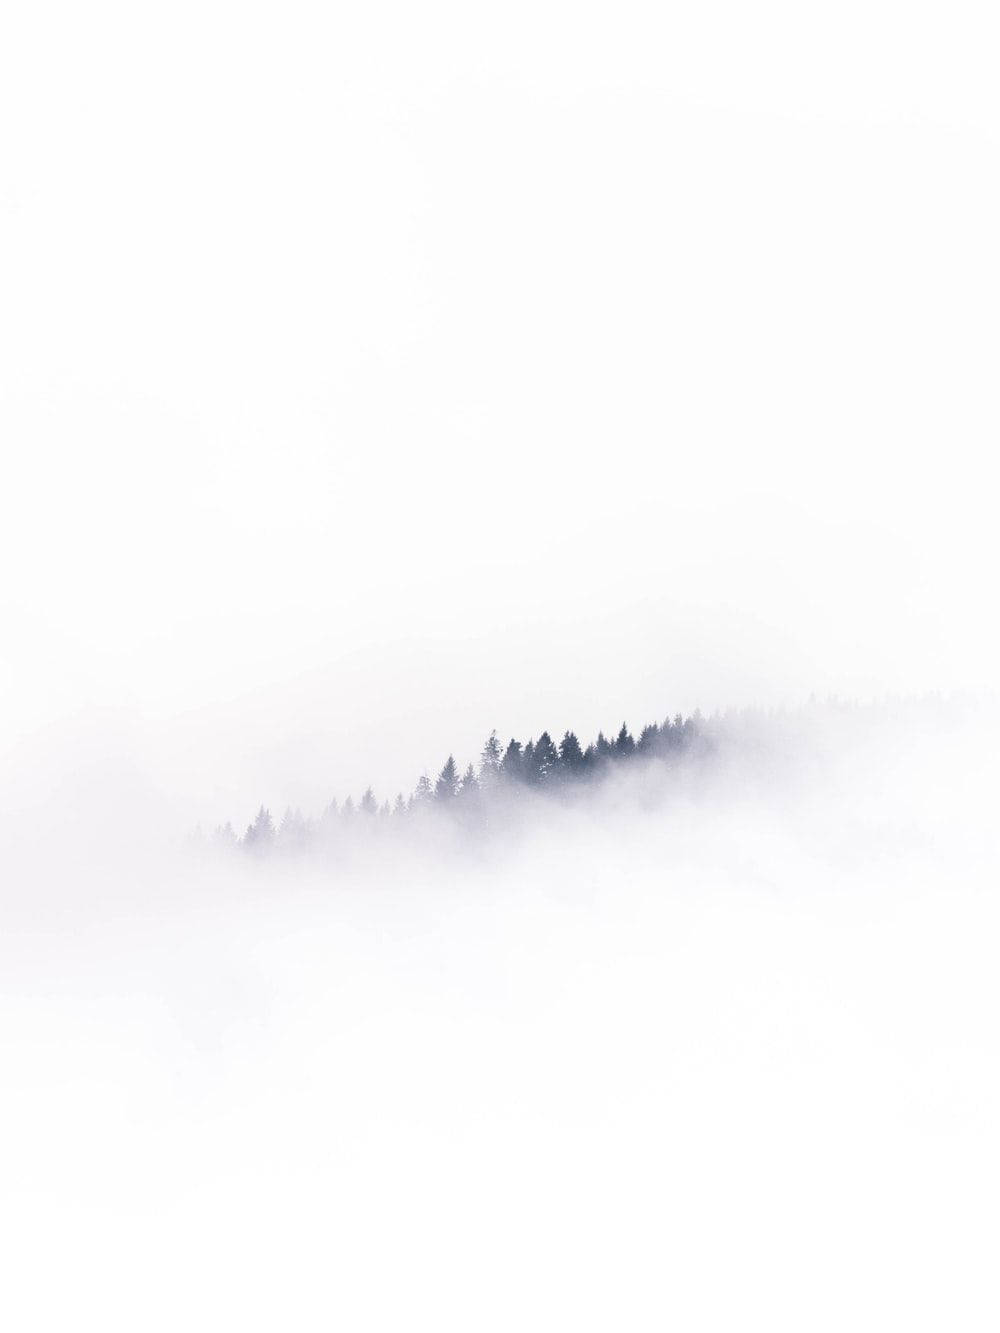 Grayscale Mountain Range For White Screen Wallpaper